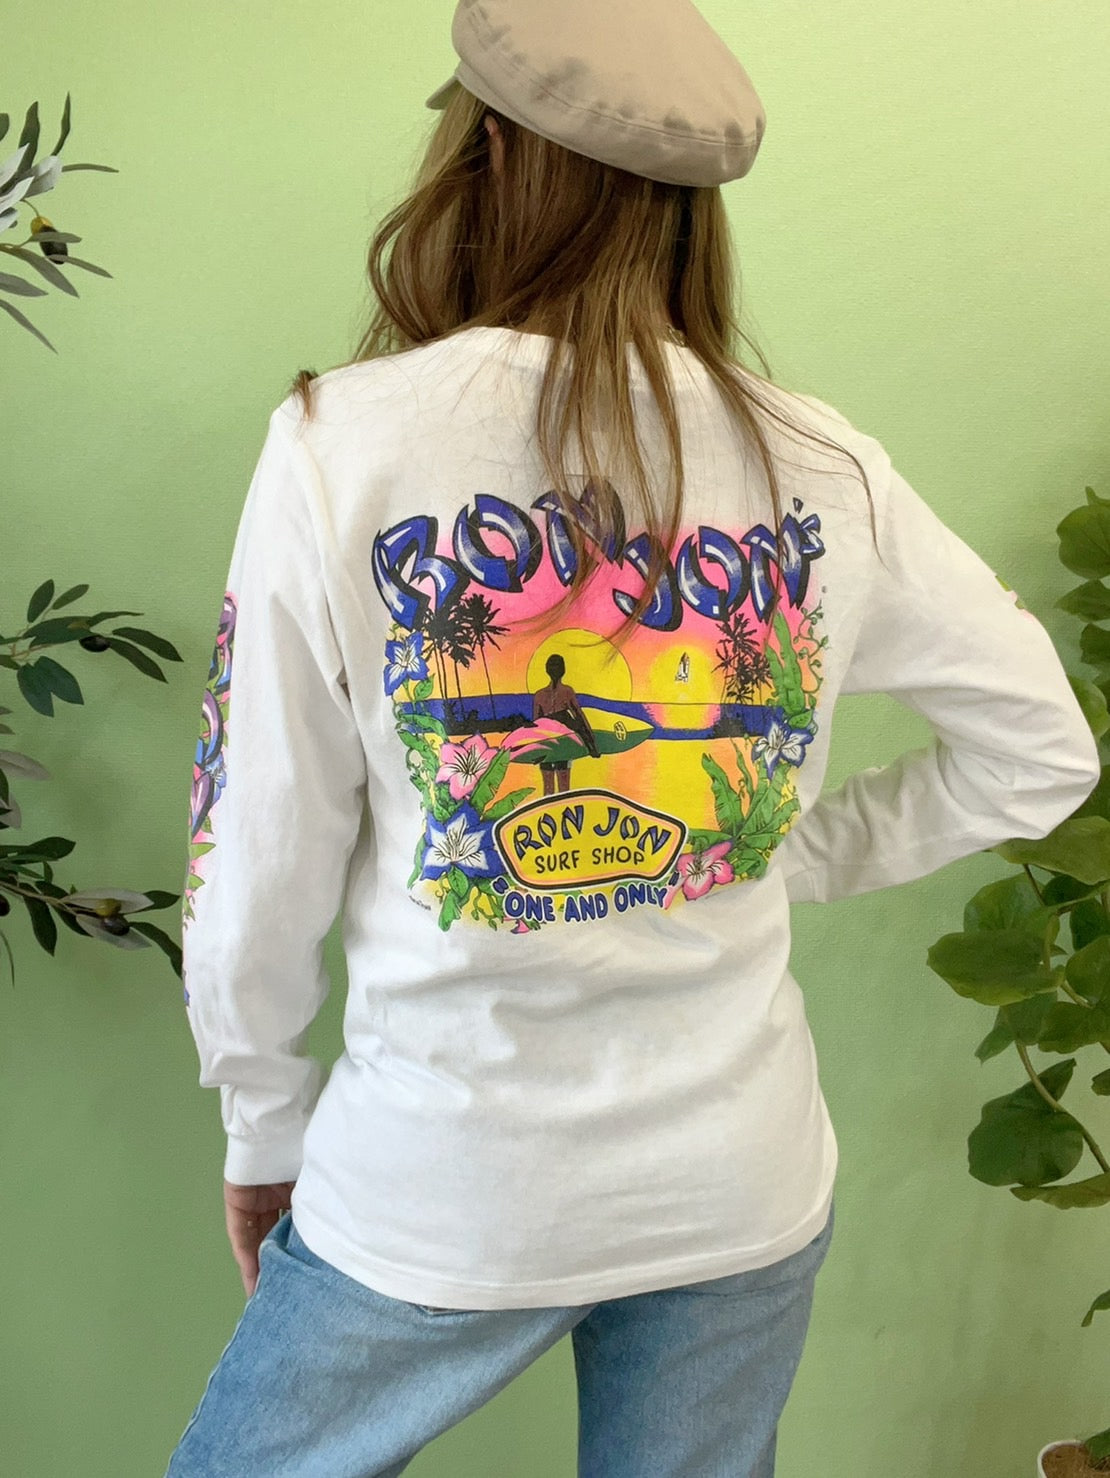 【RON JON】90's RonJon Surf Shop Vintage long sleeve T-Shirt made in USA（men's S)